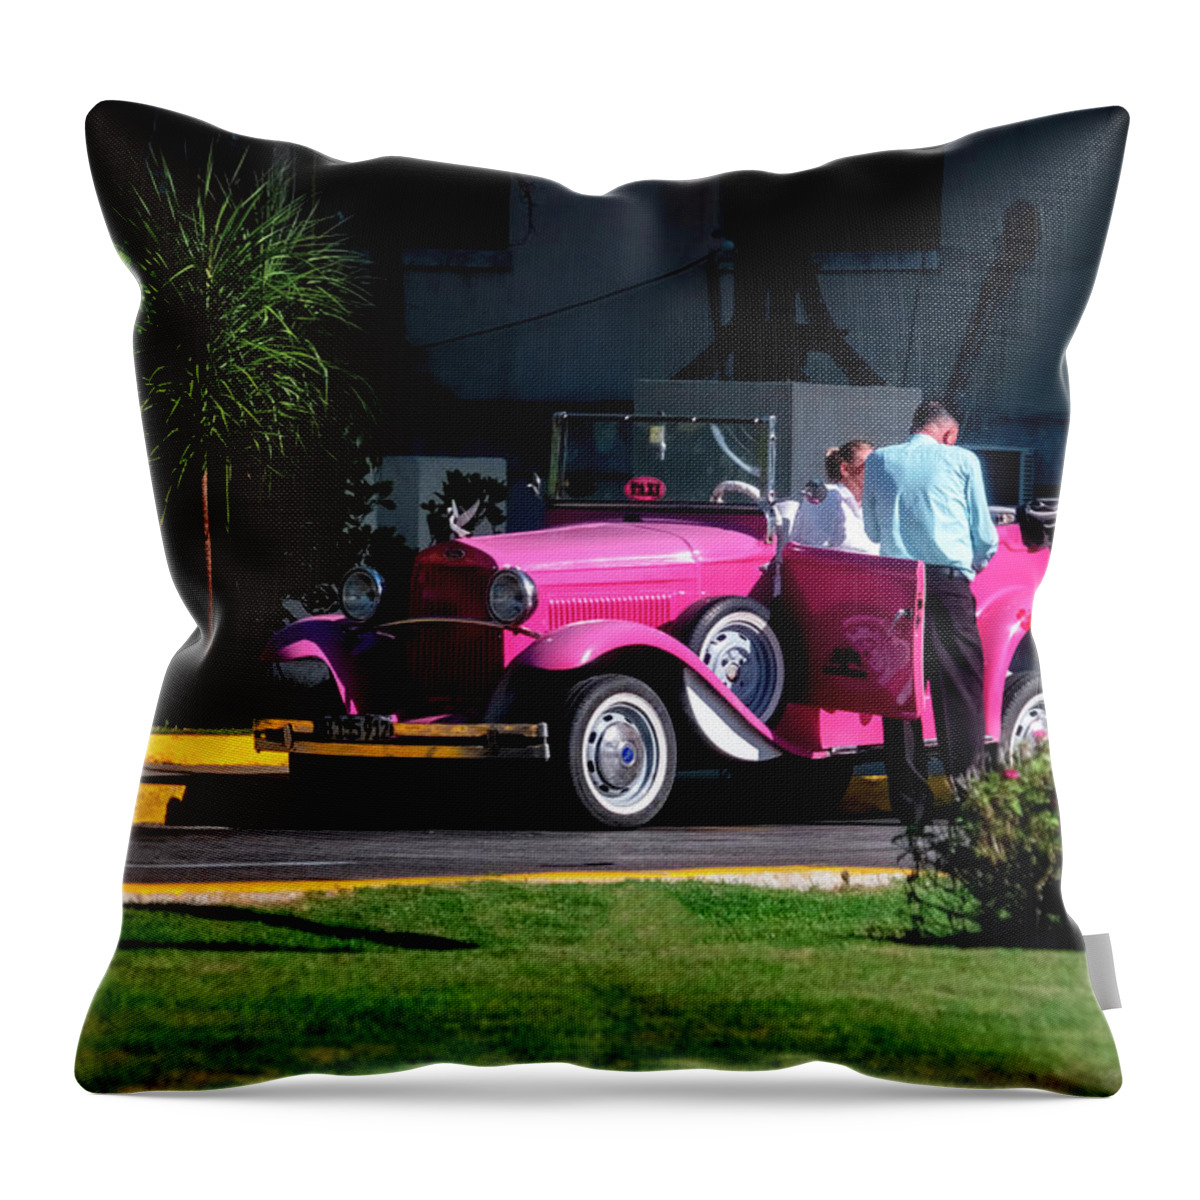 Havana Cuba Throw Pillow featuring the photograph Havana Taxi by Tom Singleton